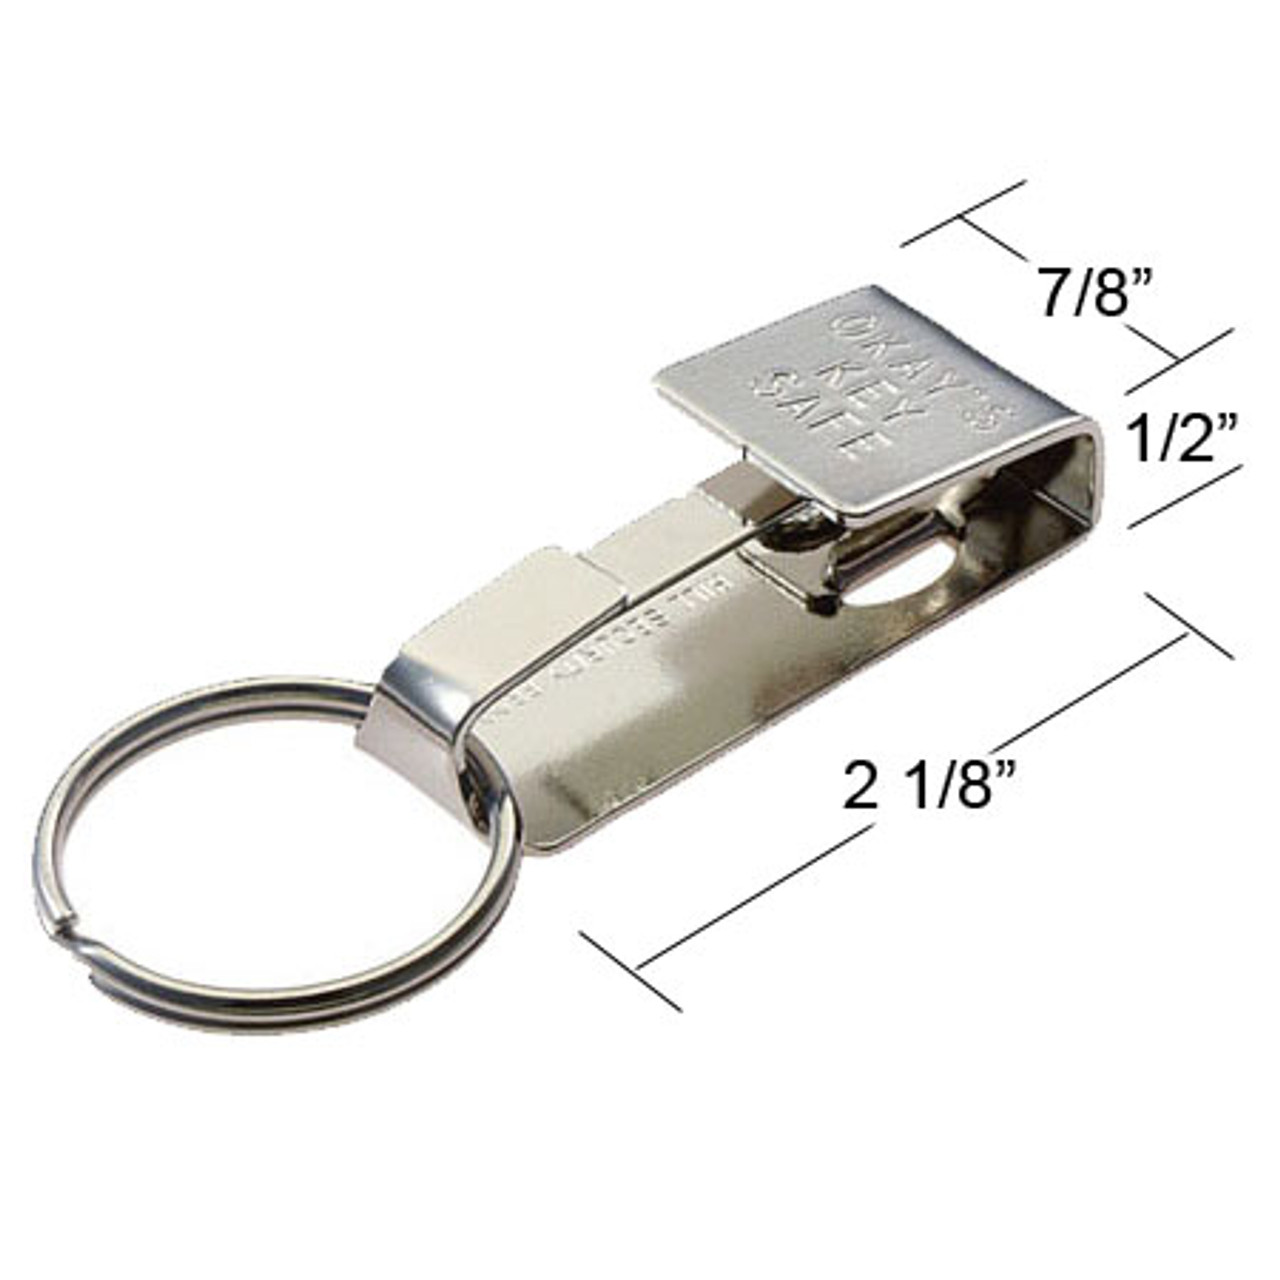 1 1/4 inch Key Fob Hardware with Key Ring Sets - Nickel Finish